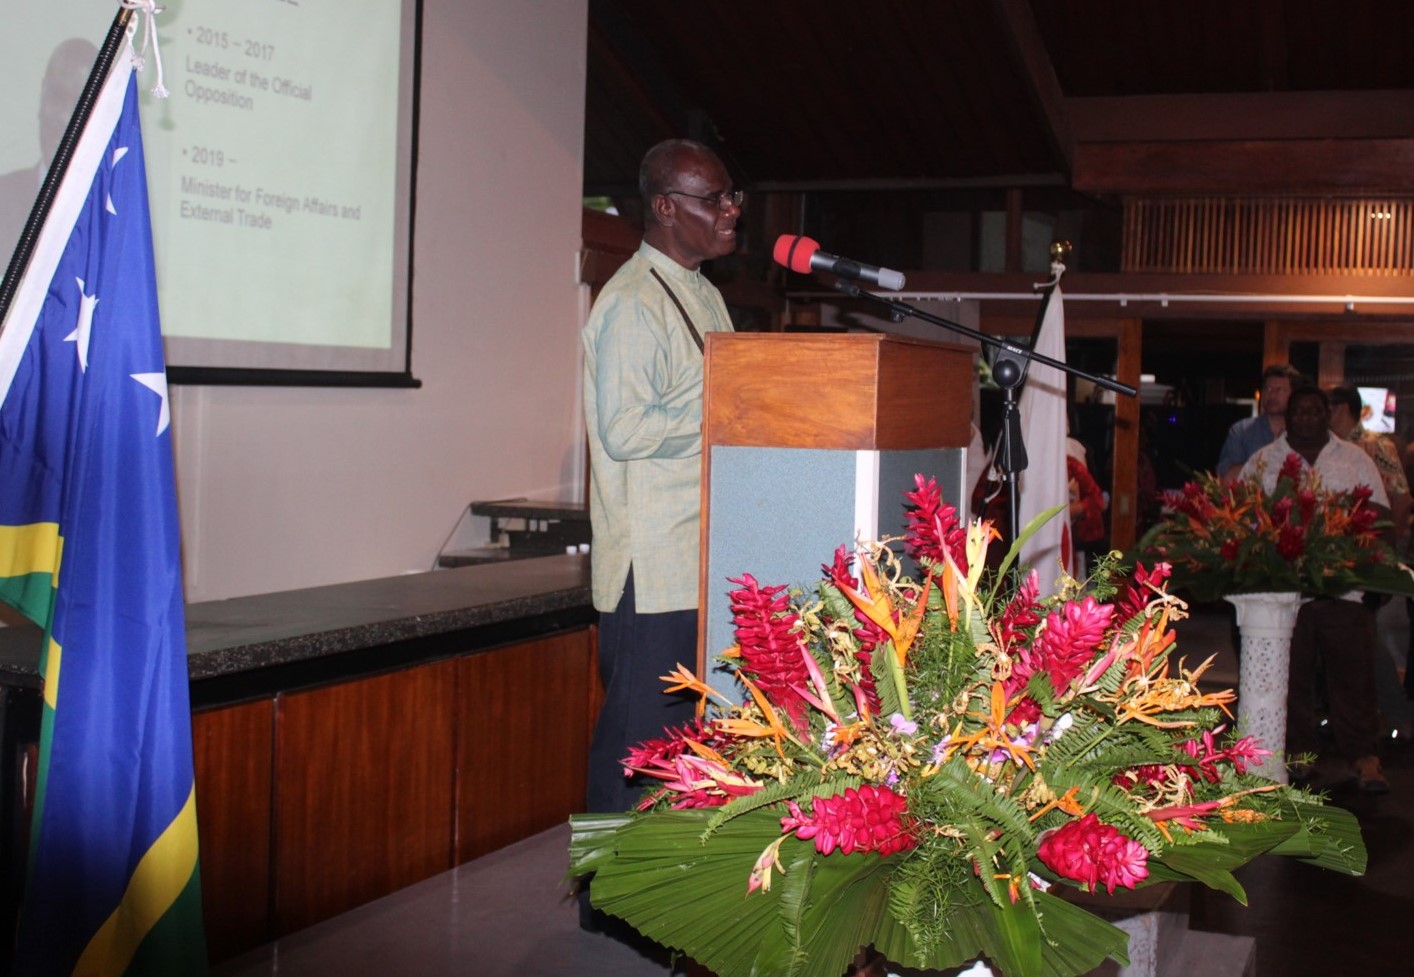 Manele reaffirms growing friendship between Solomon Islands and Japan